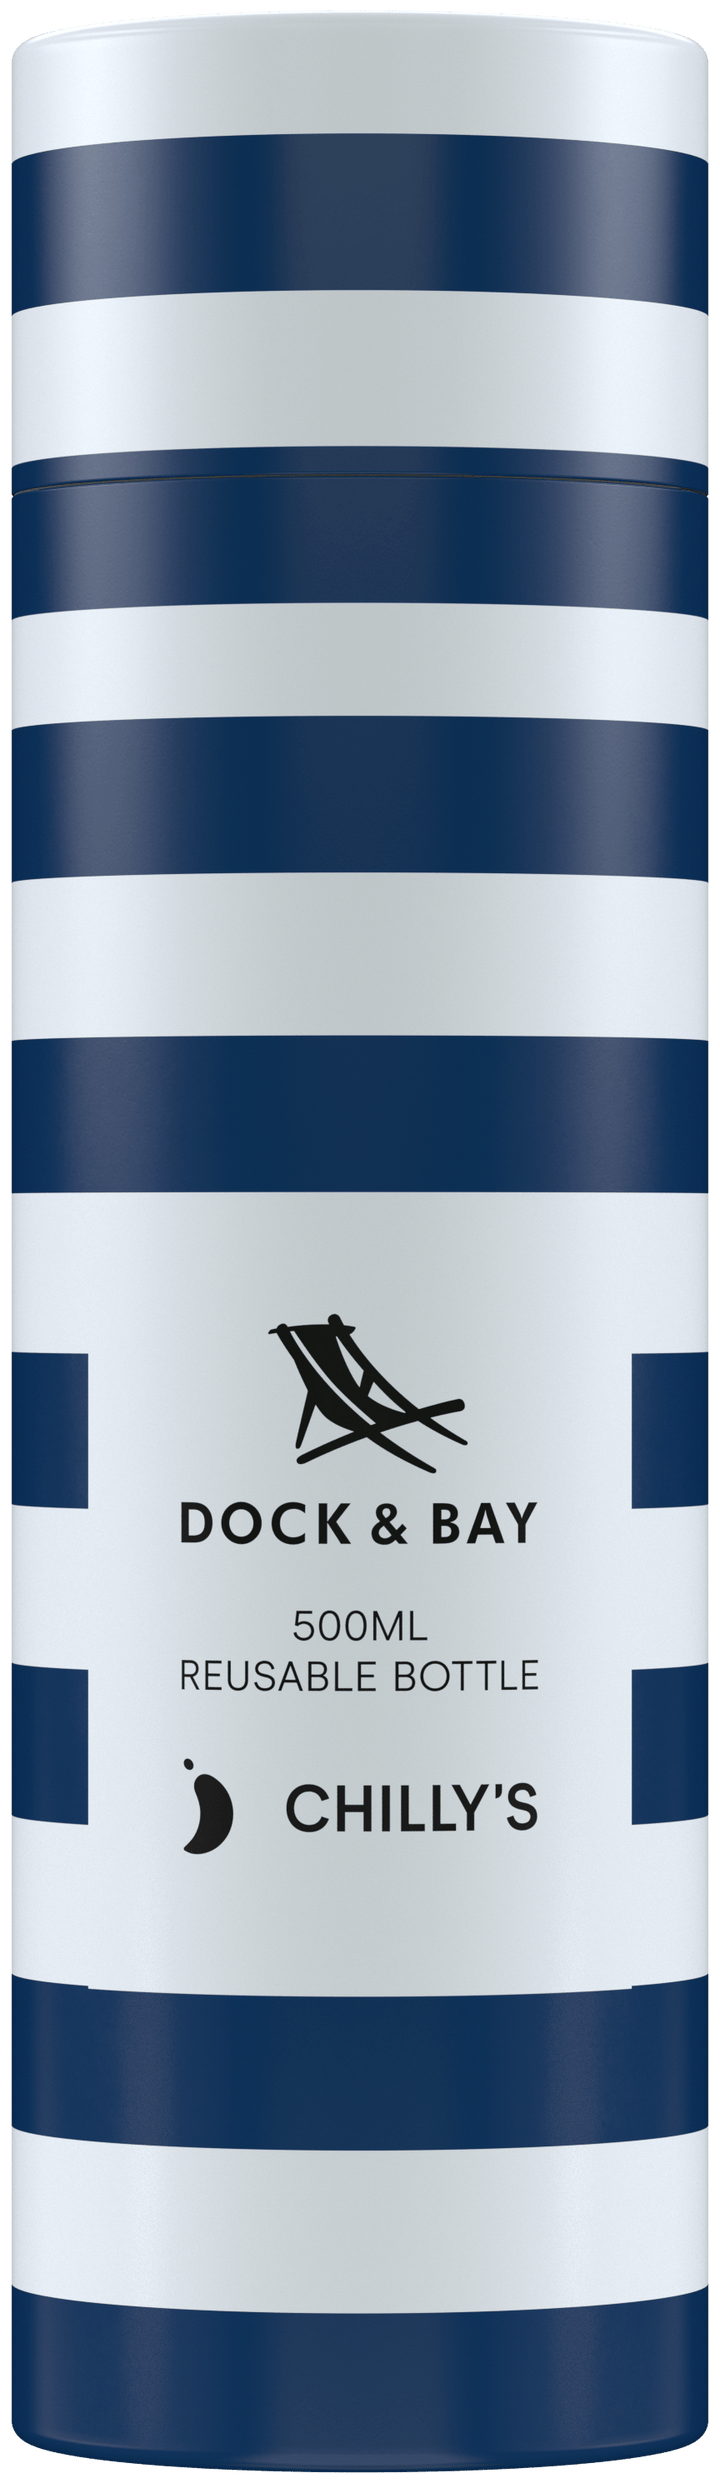 Botella Chilly's Dock & Bay 500 ml - Bizcocho de Yogur